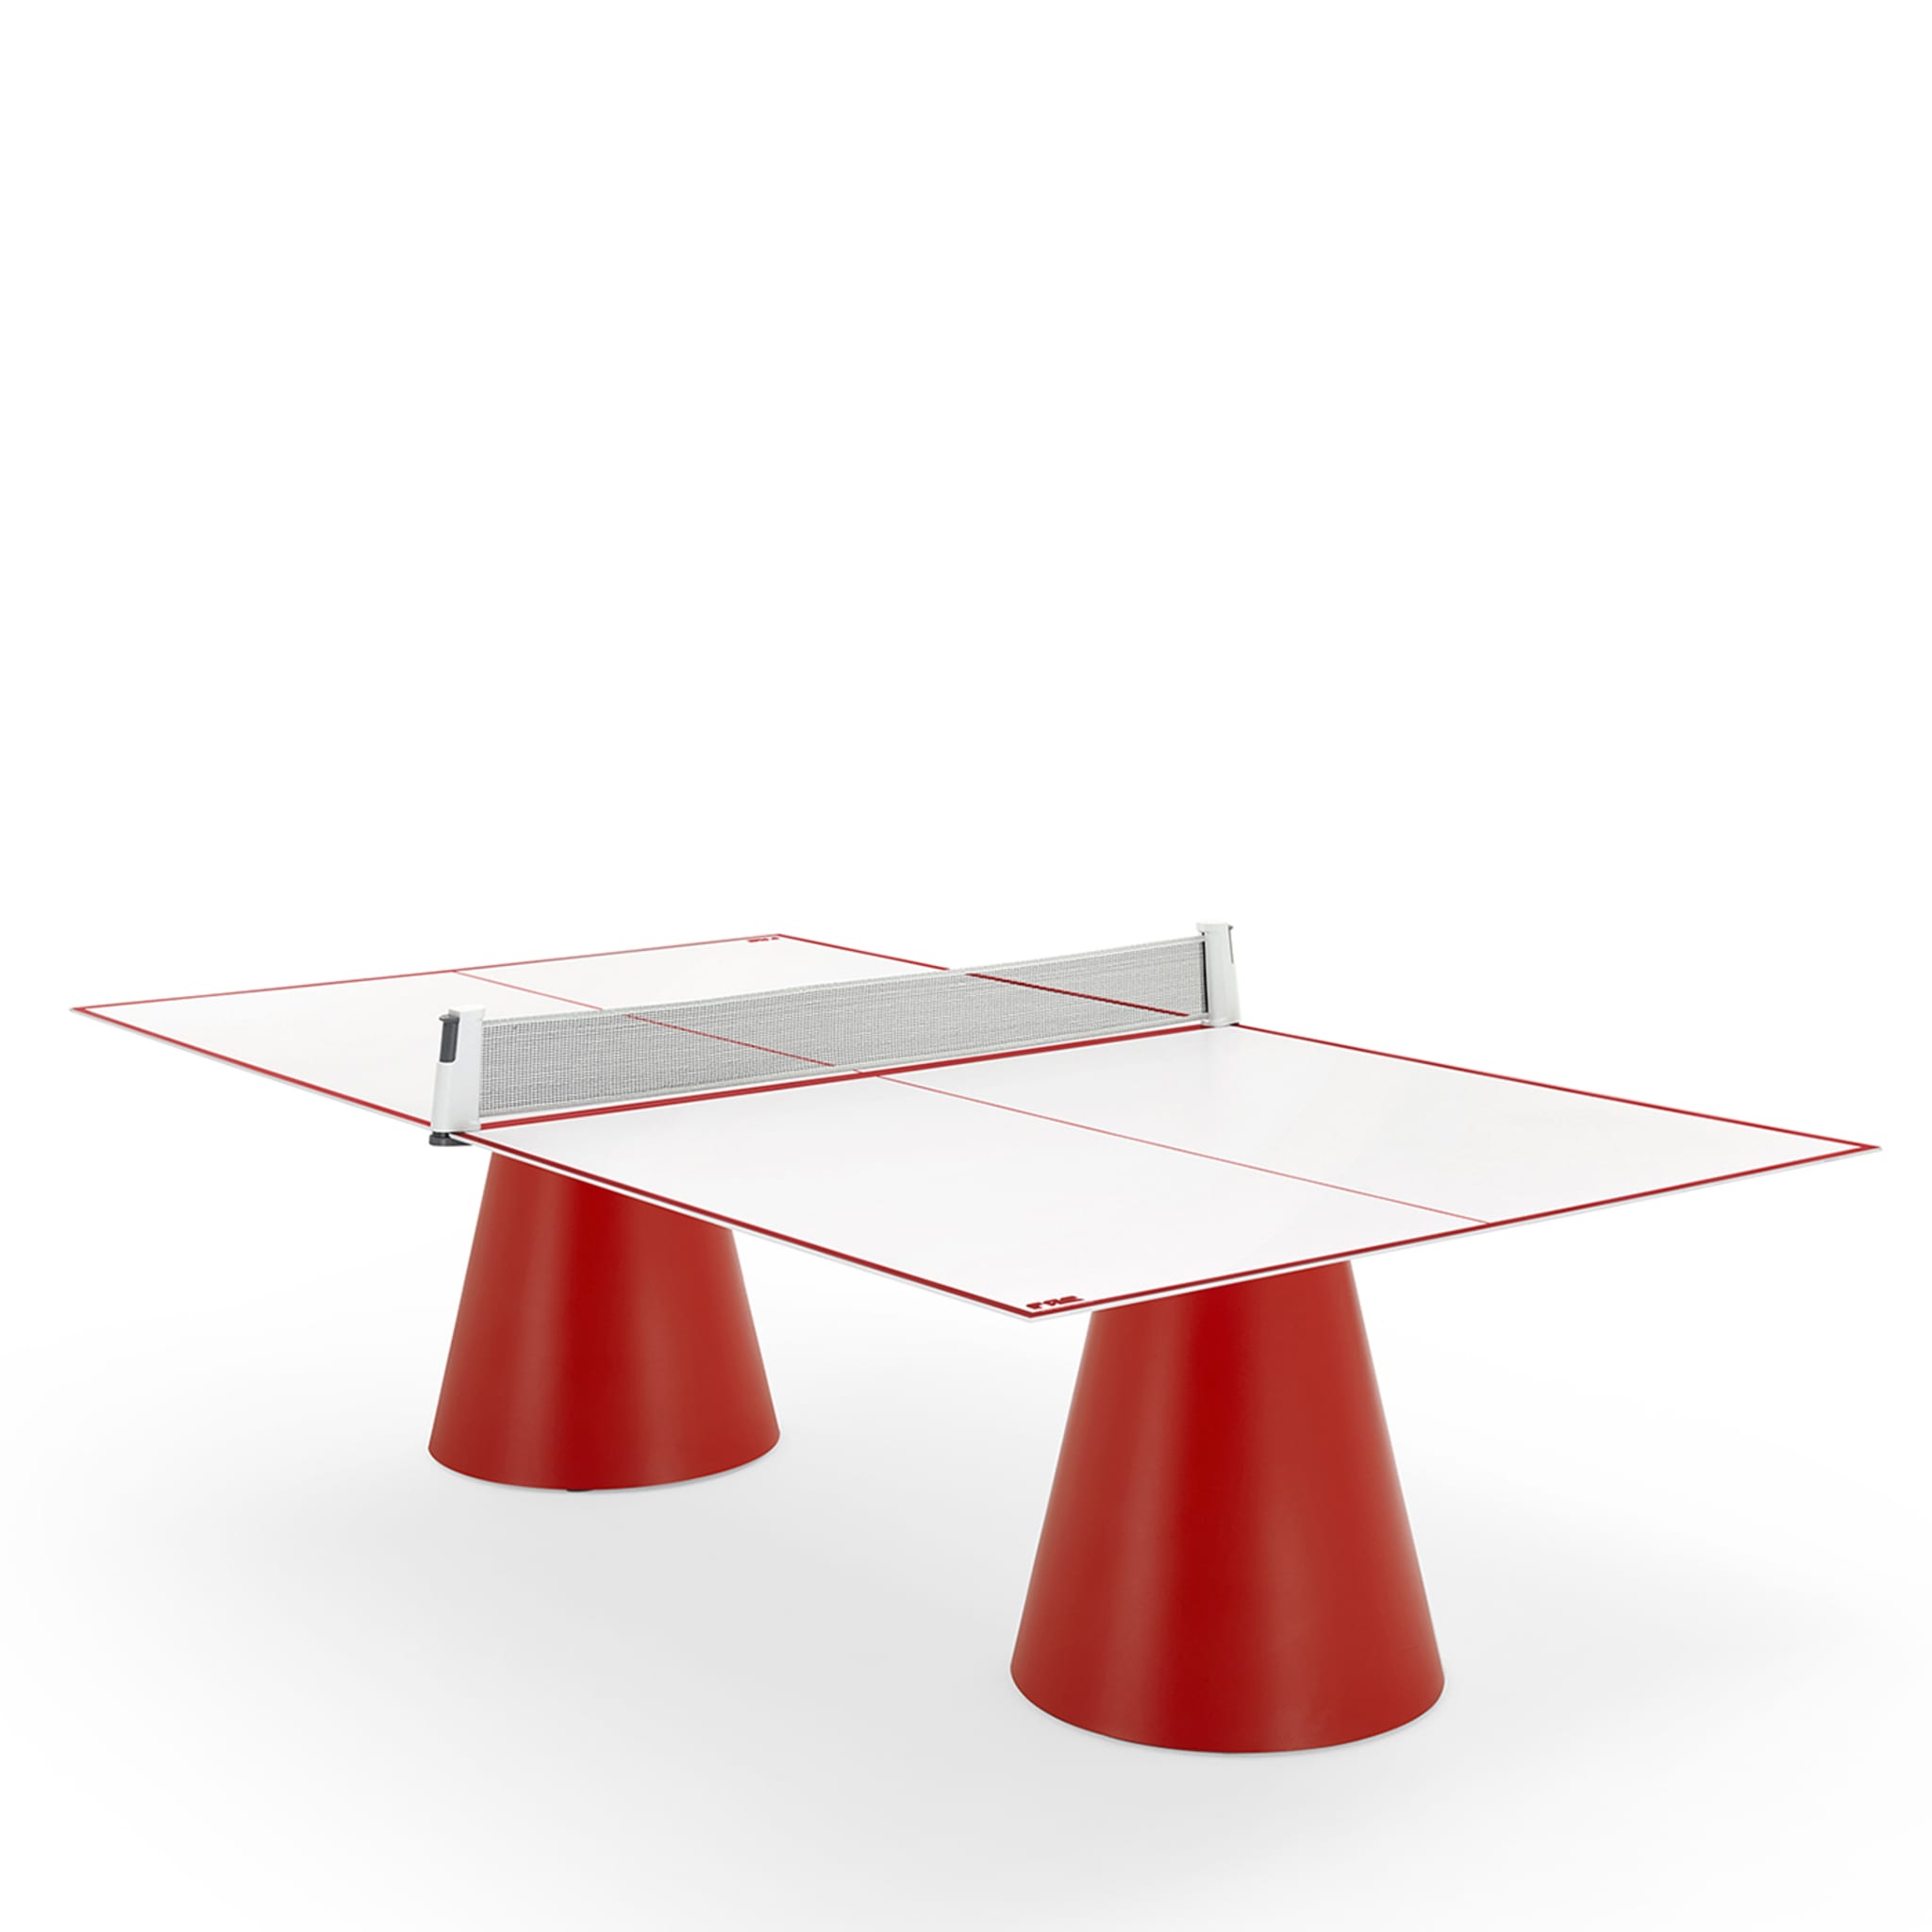 Dada Outdoor Red Ping Pong Table by Basaglia + Rota Nodari - Alternative view 1